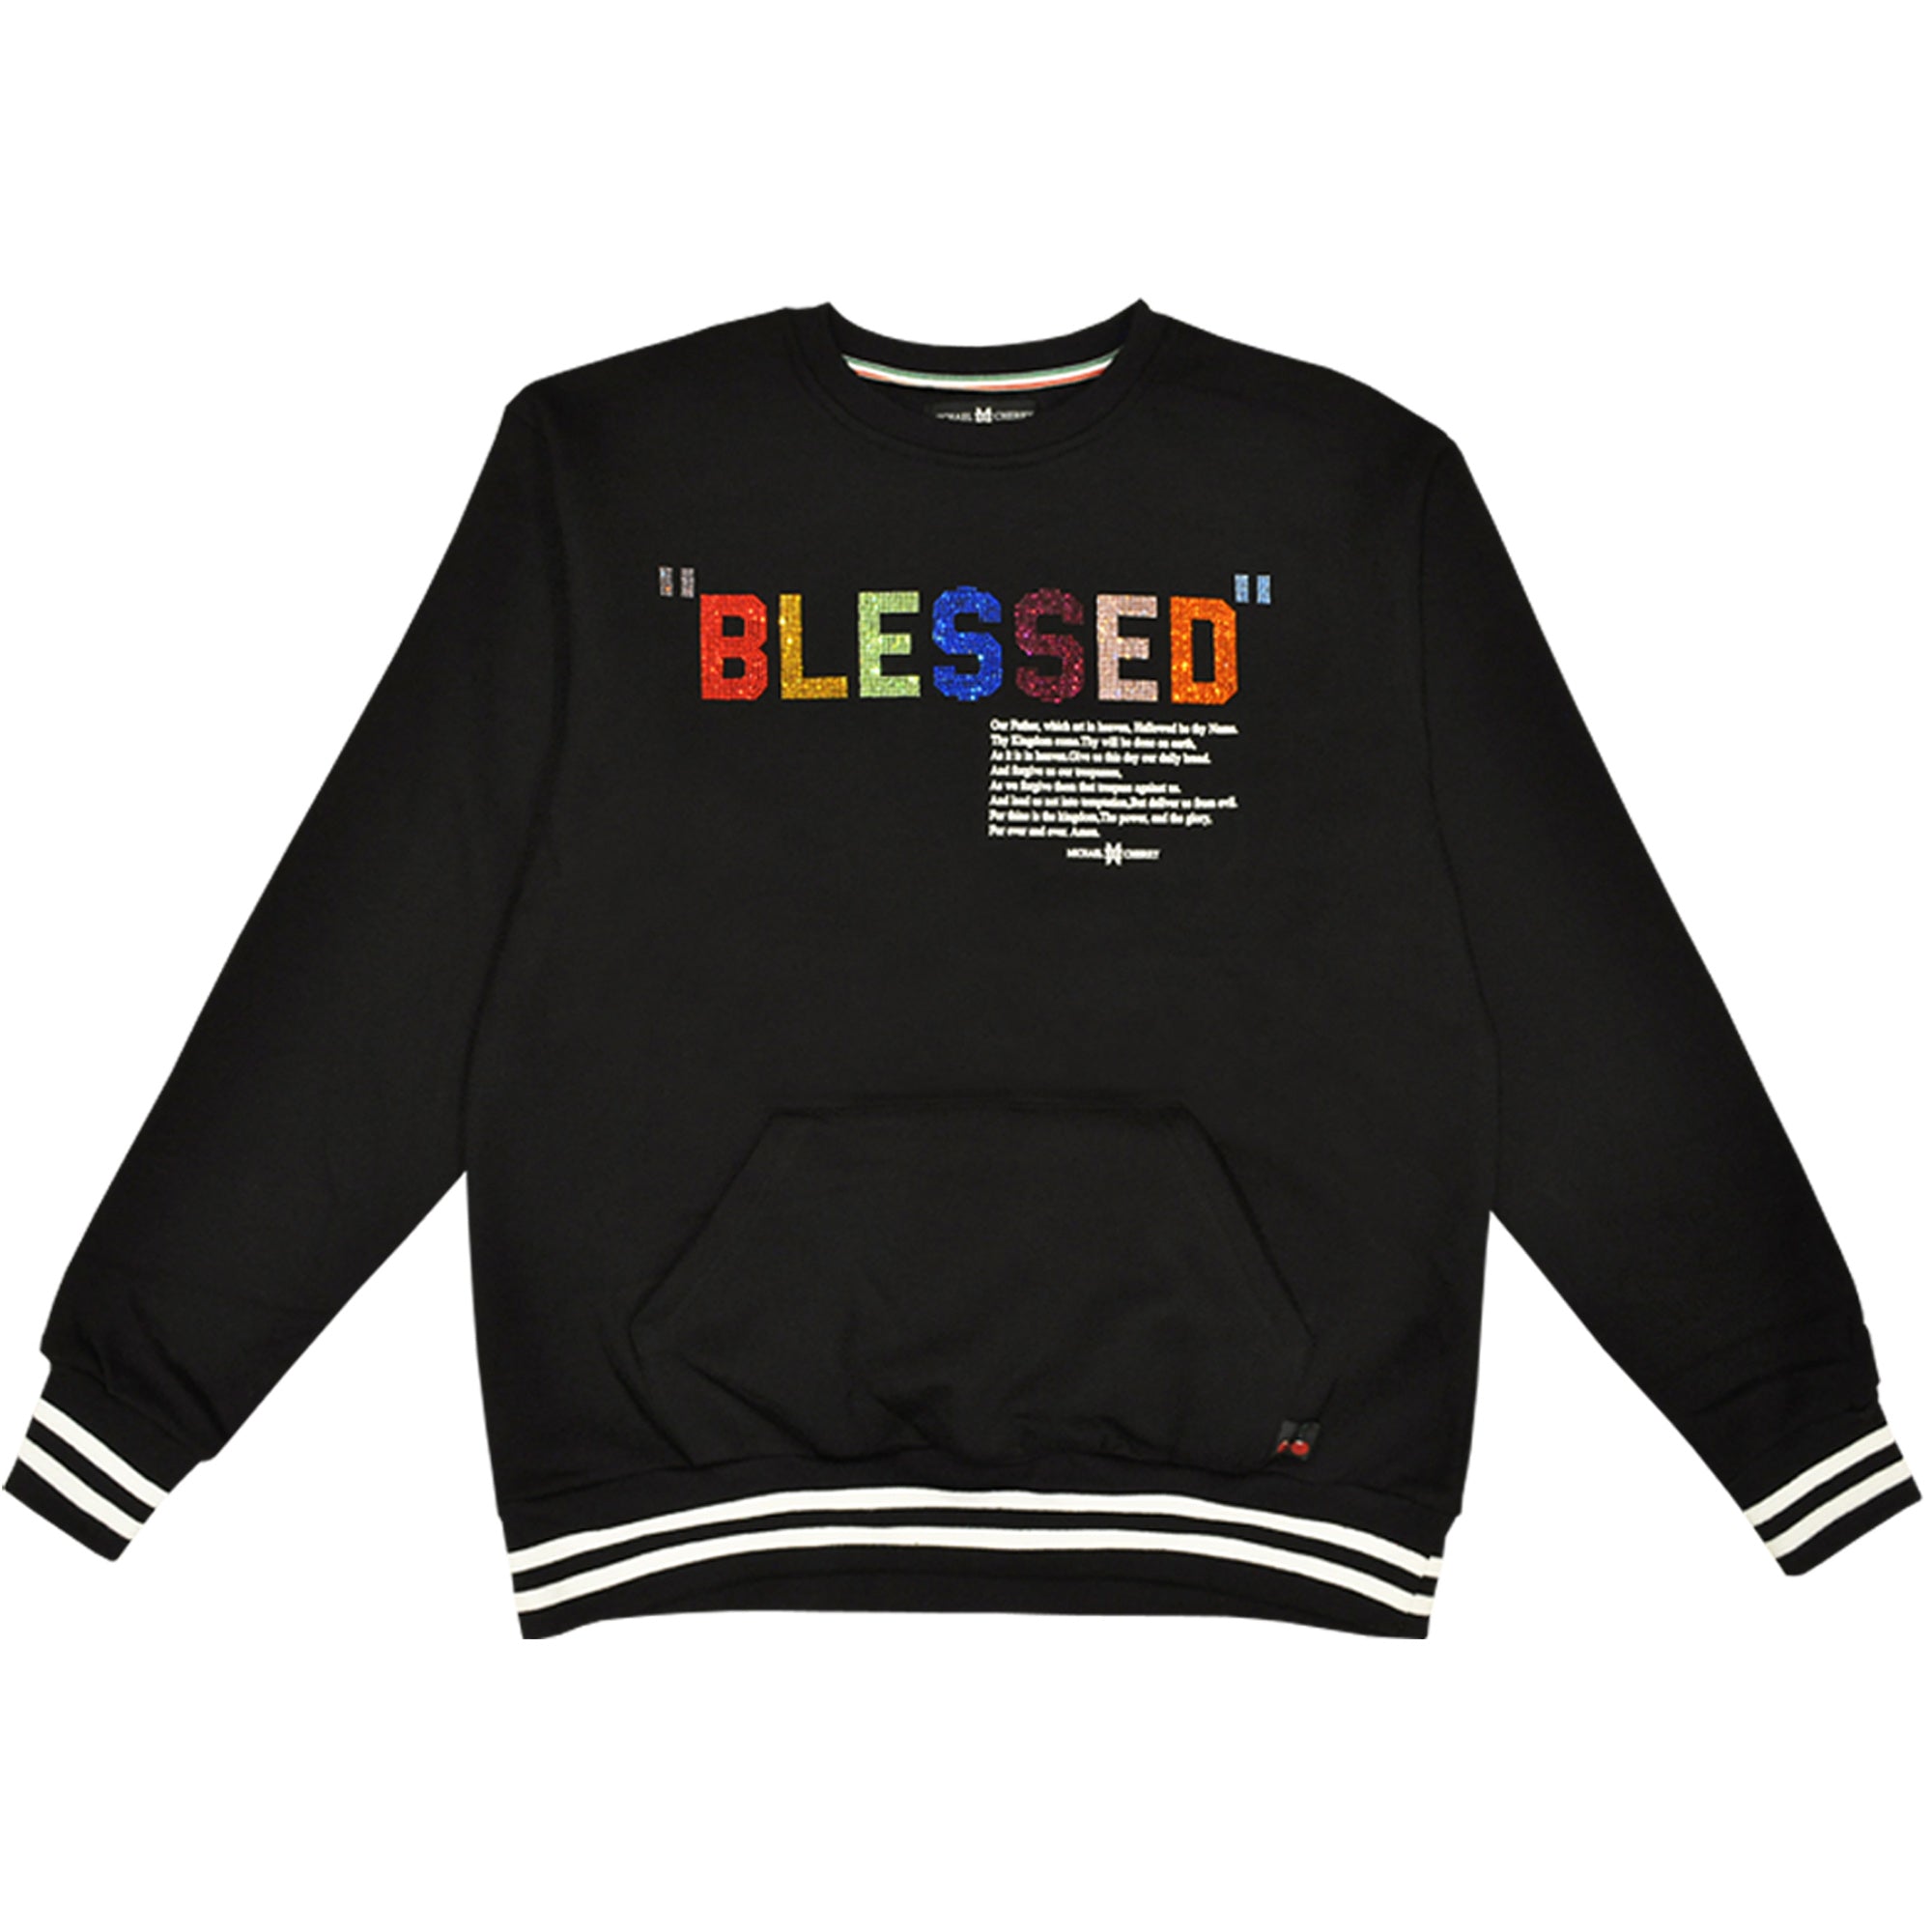 Blessed Sweatshirt Black (RE-STOCKED)